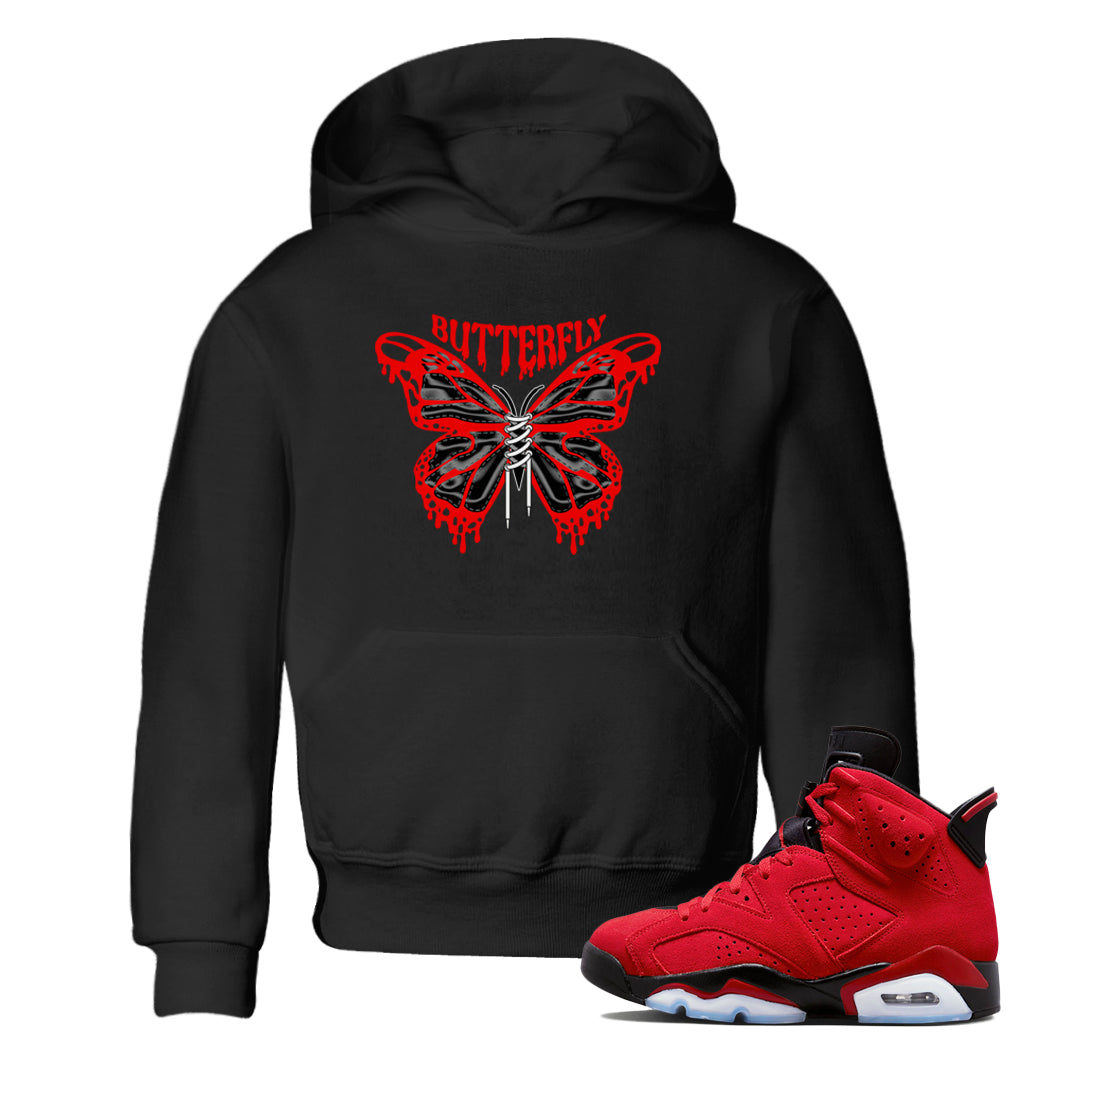 Air Jordan 6 Toro Bravo Sneaker Match Tees Butterfly Sneaker Tees AJ6 Toro Bravo Sneaker Release Tees Kids Shirts Black 1